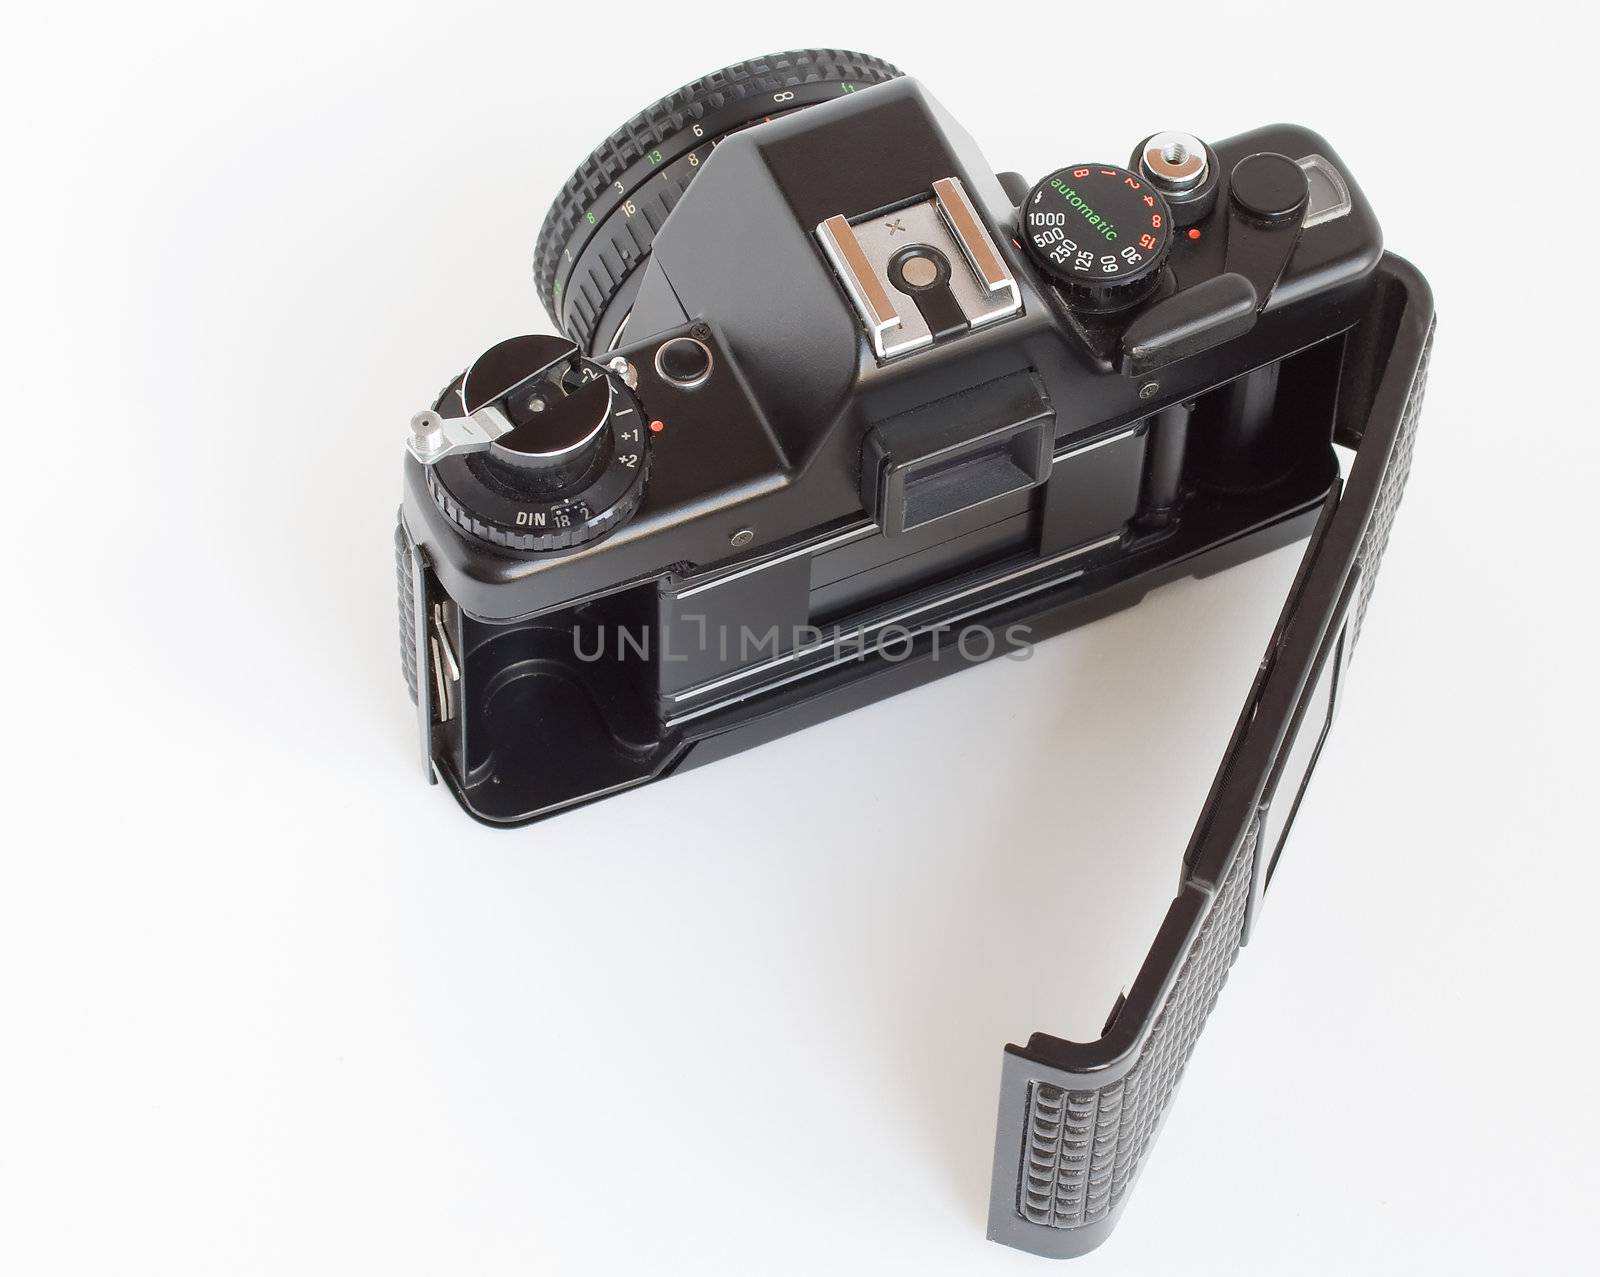 Vintage SLR camera with opened film door by serpl